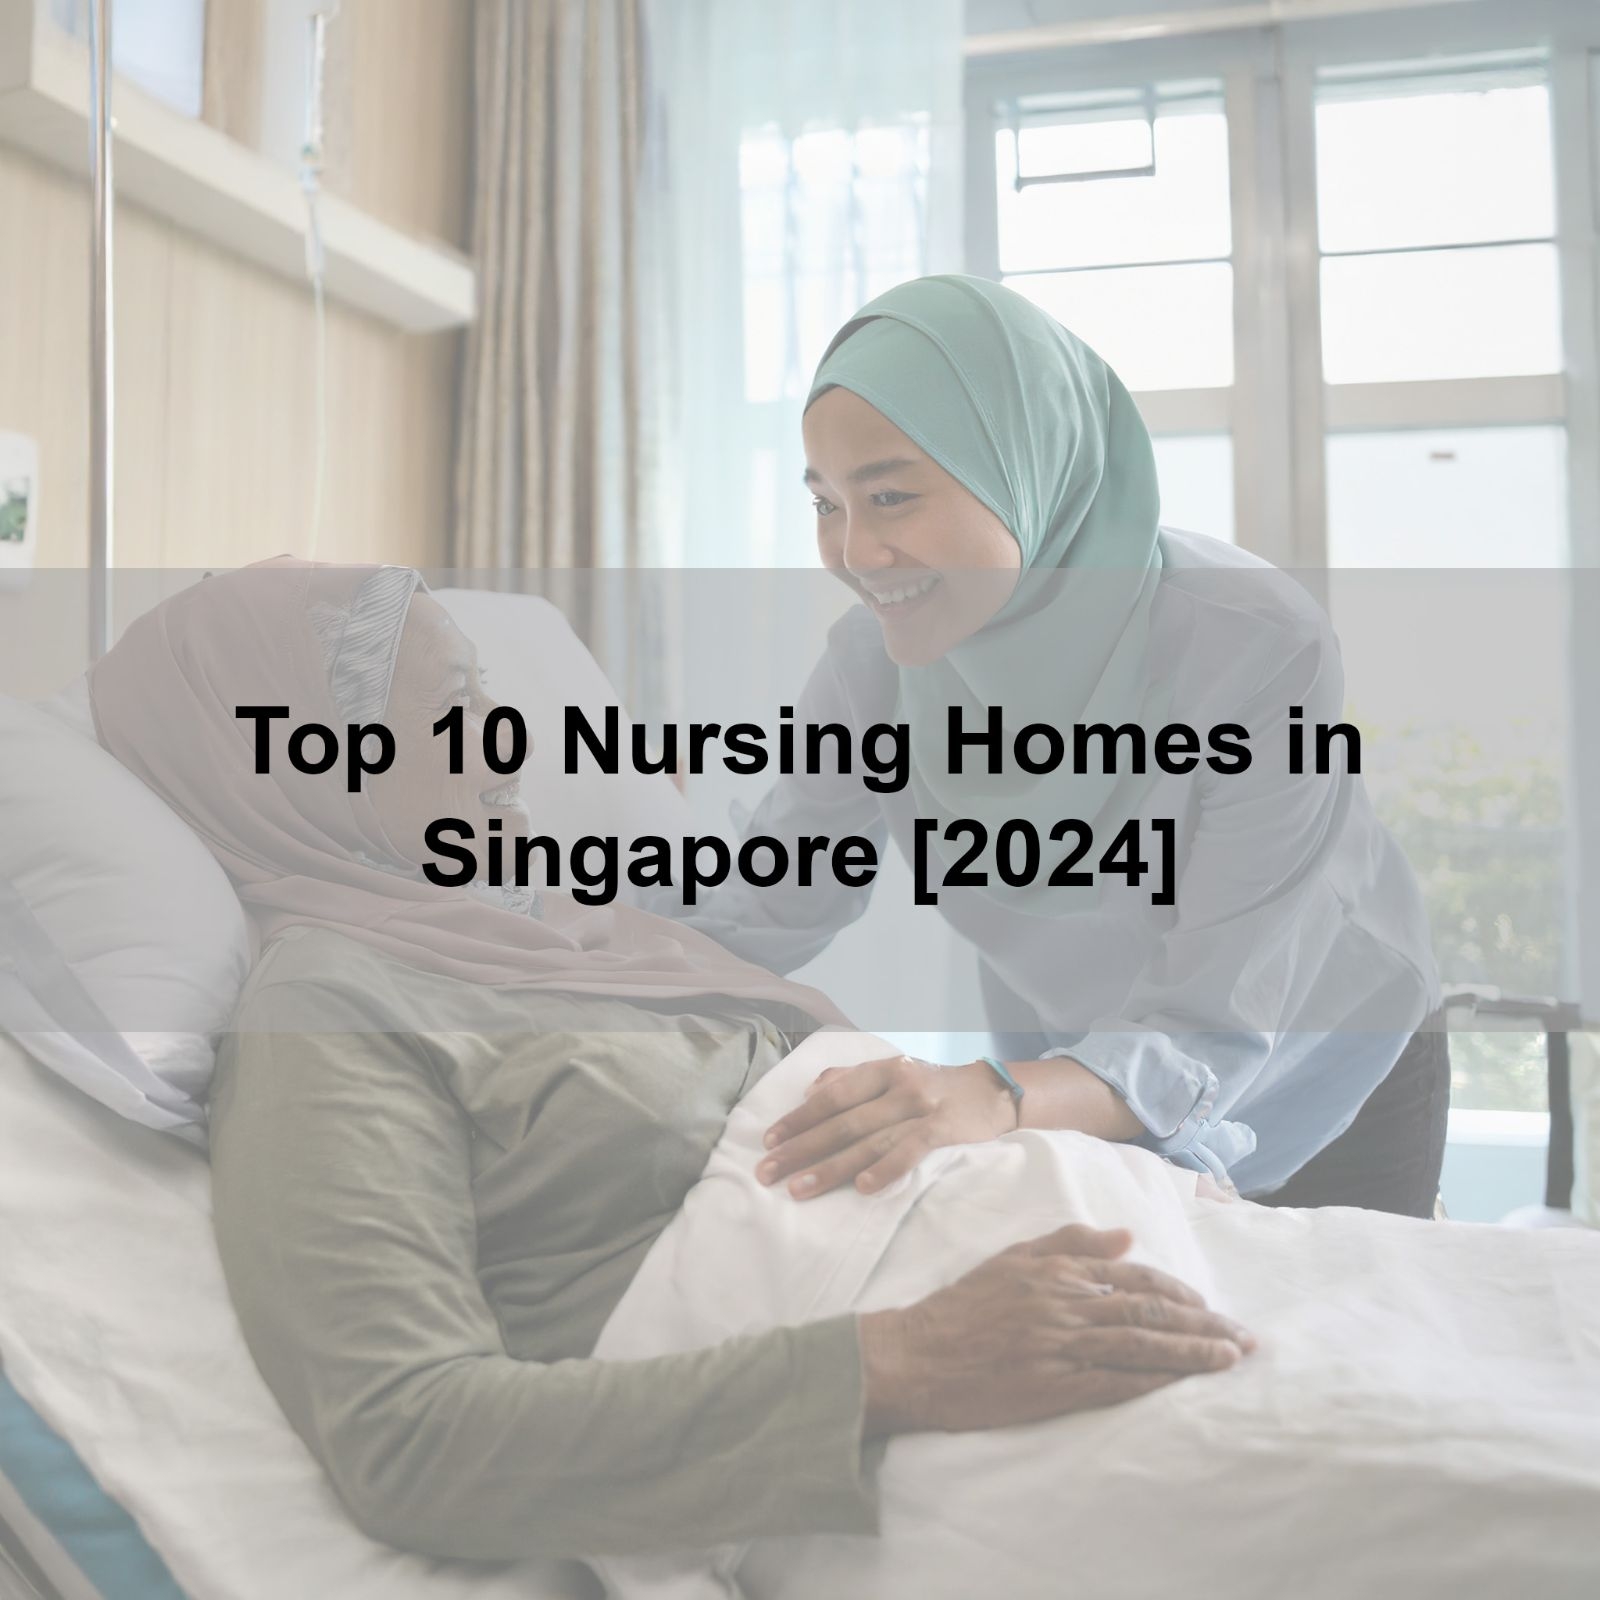 Top 10 Nursing Homes in Singapore [2024]